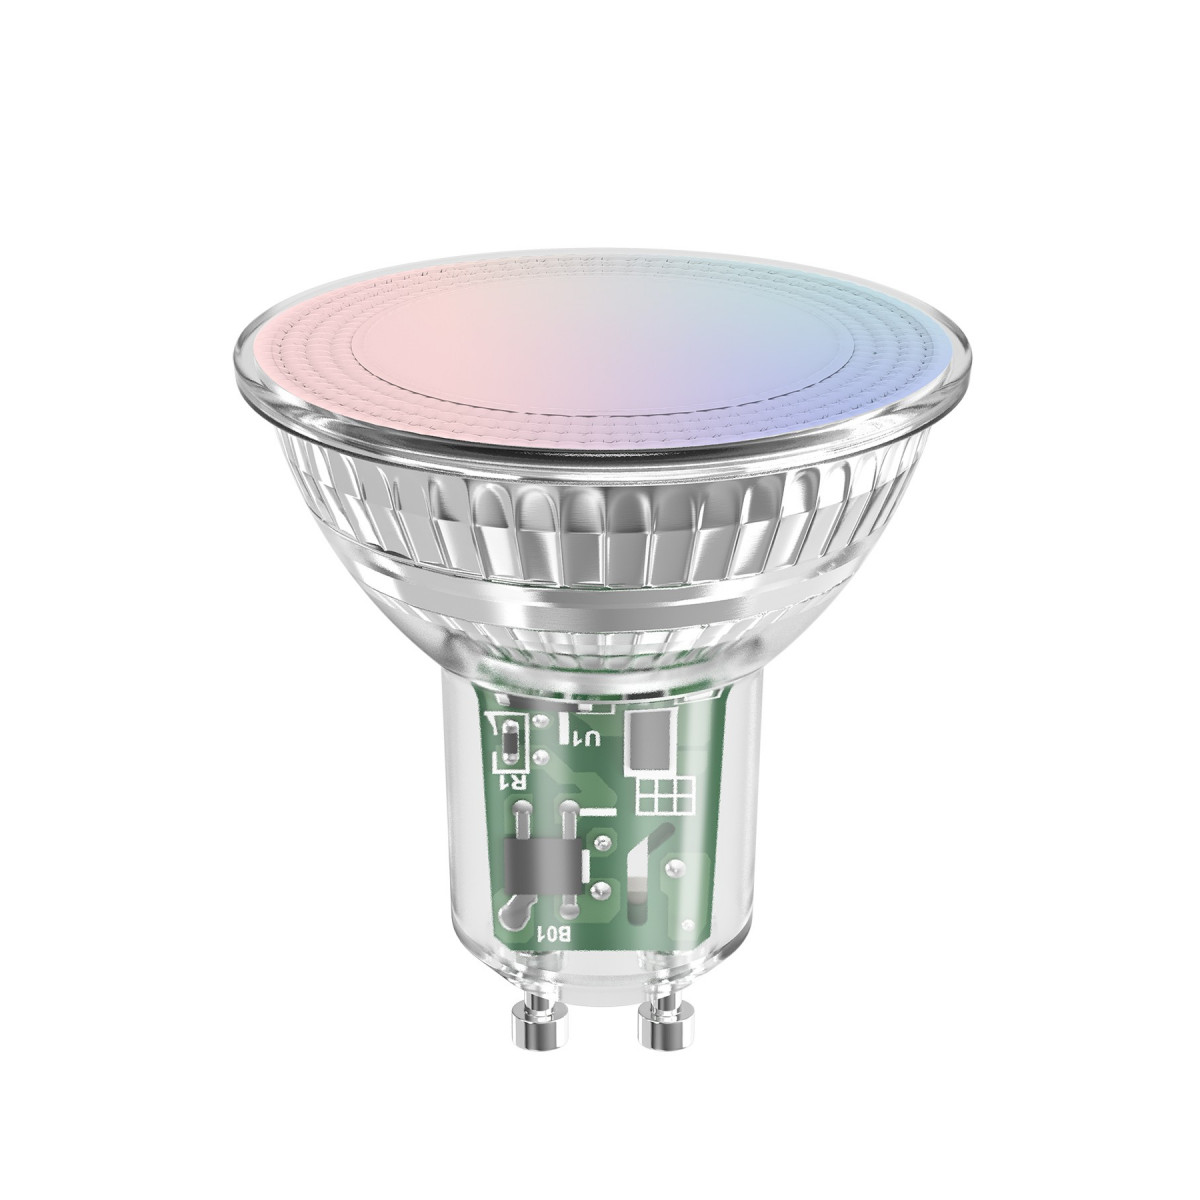 Calex GU10 Smart Outdoor multicolor led lamp